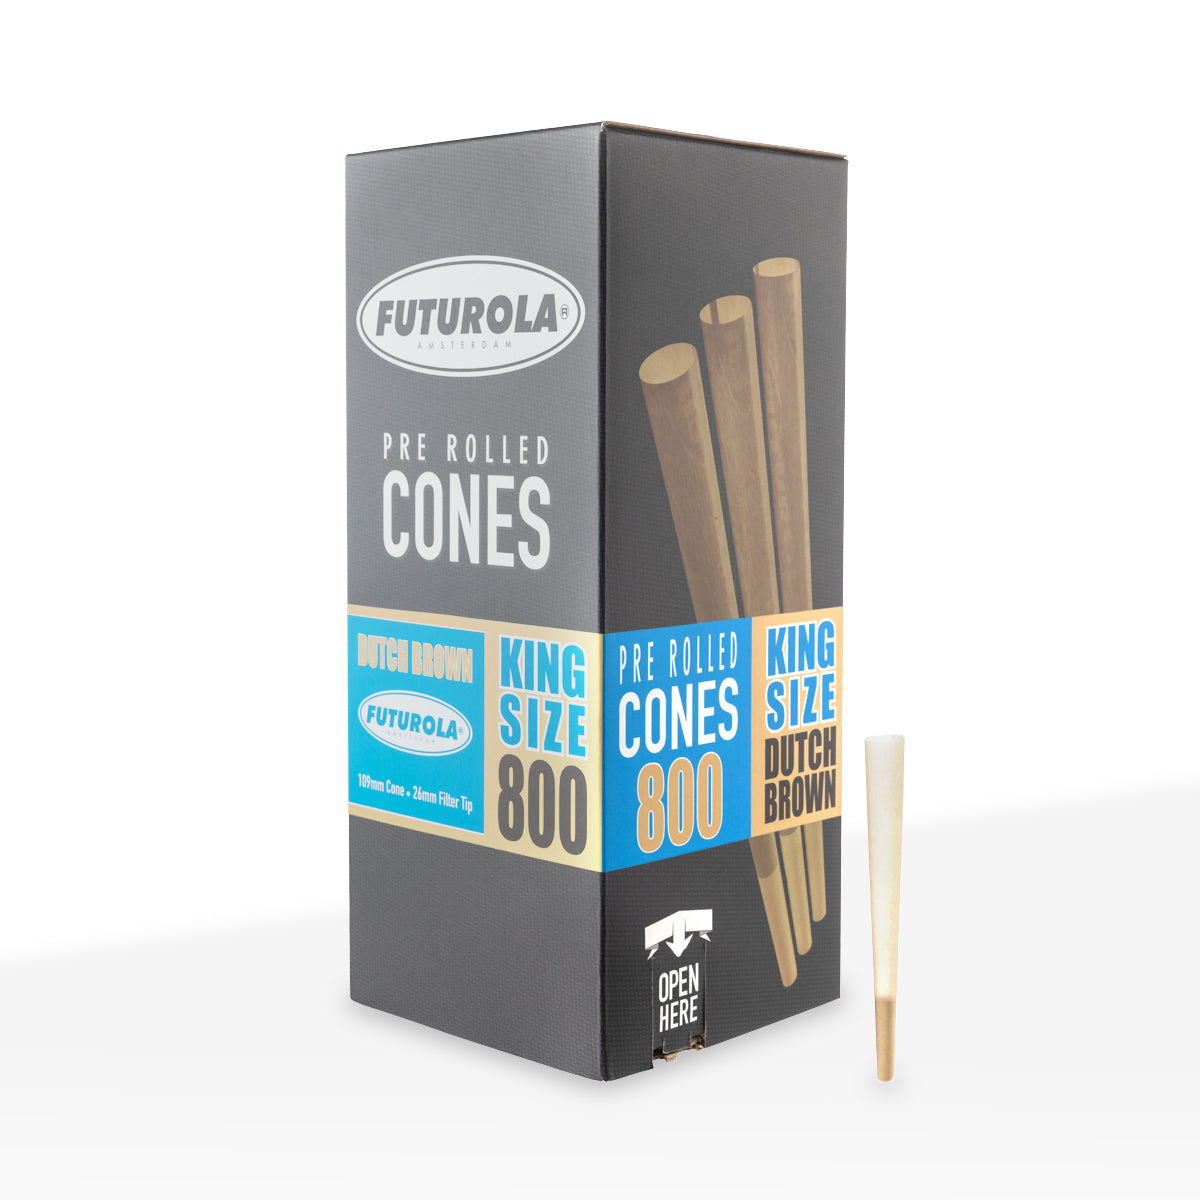 FUTUROLA® | Pre-Rolled Cones King Size | 110mm - Dutch Brown - 800 Count